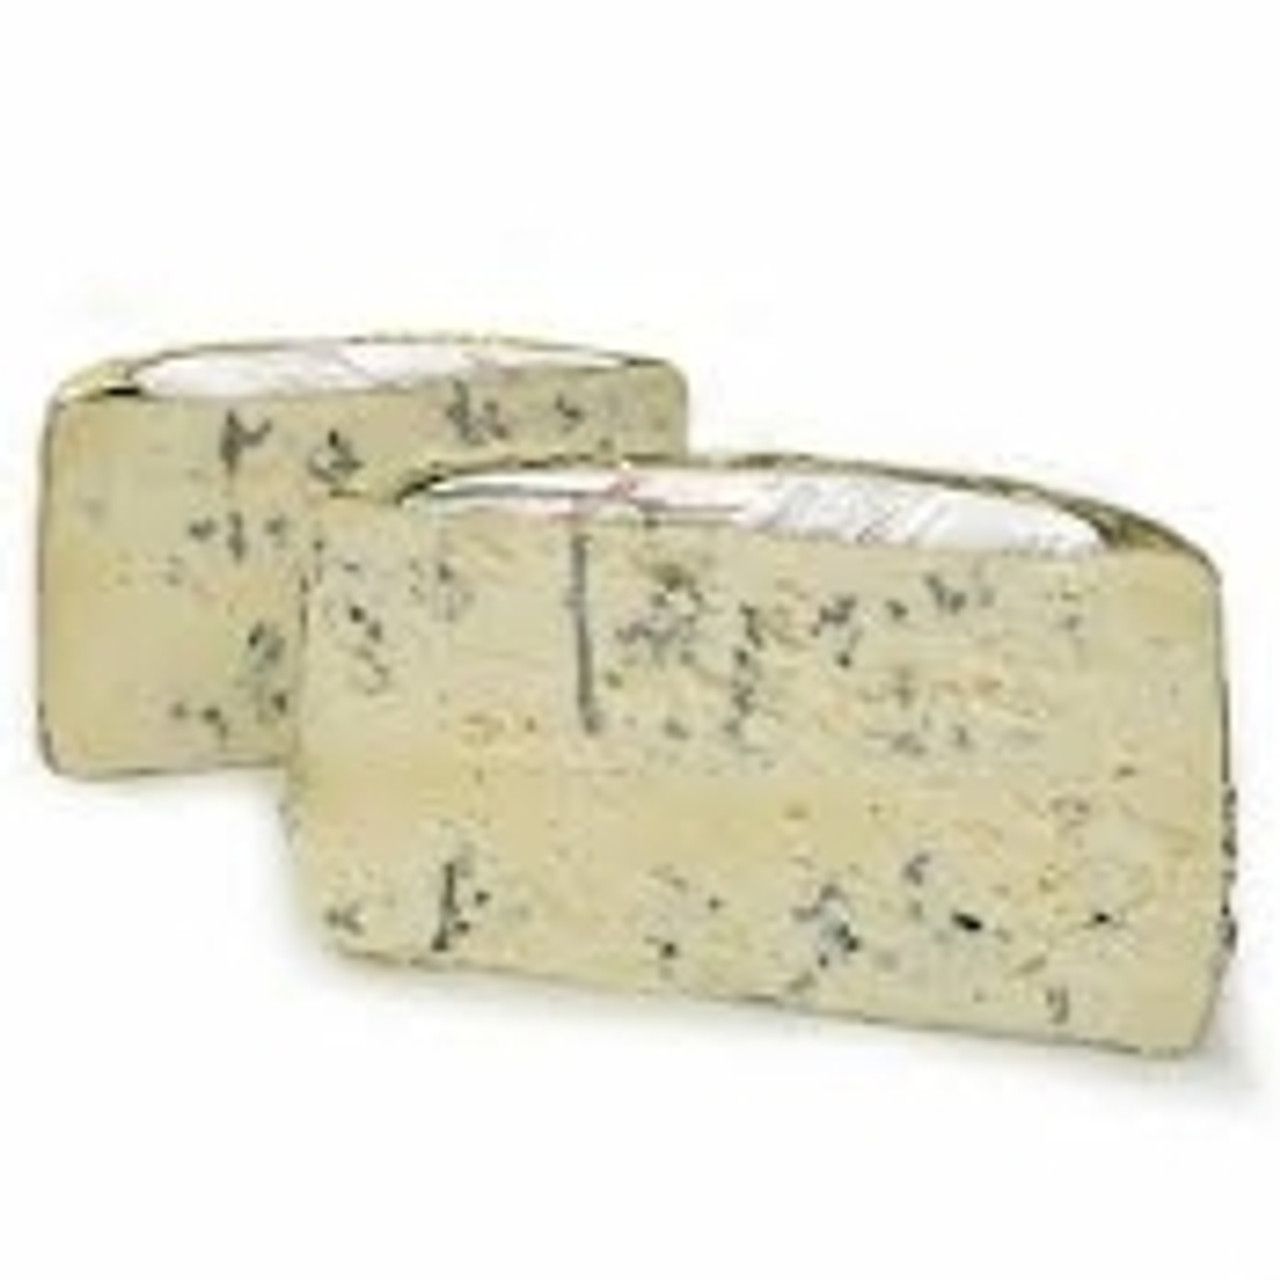 Gorgonzola Mountain - a spicy, earthy, and creamyItalian blue cheese |  Murray's Cheese